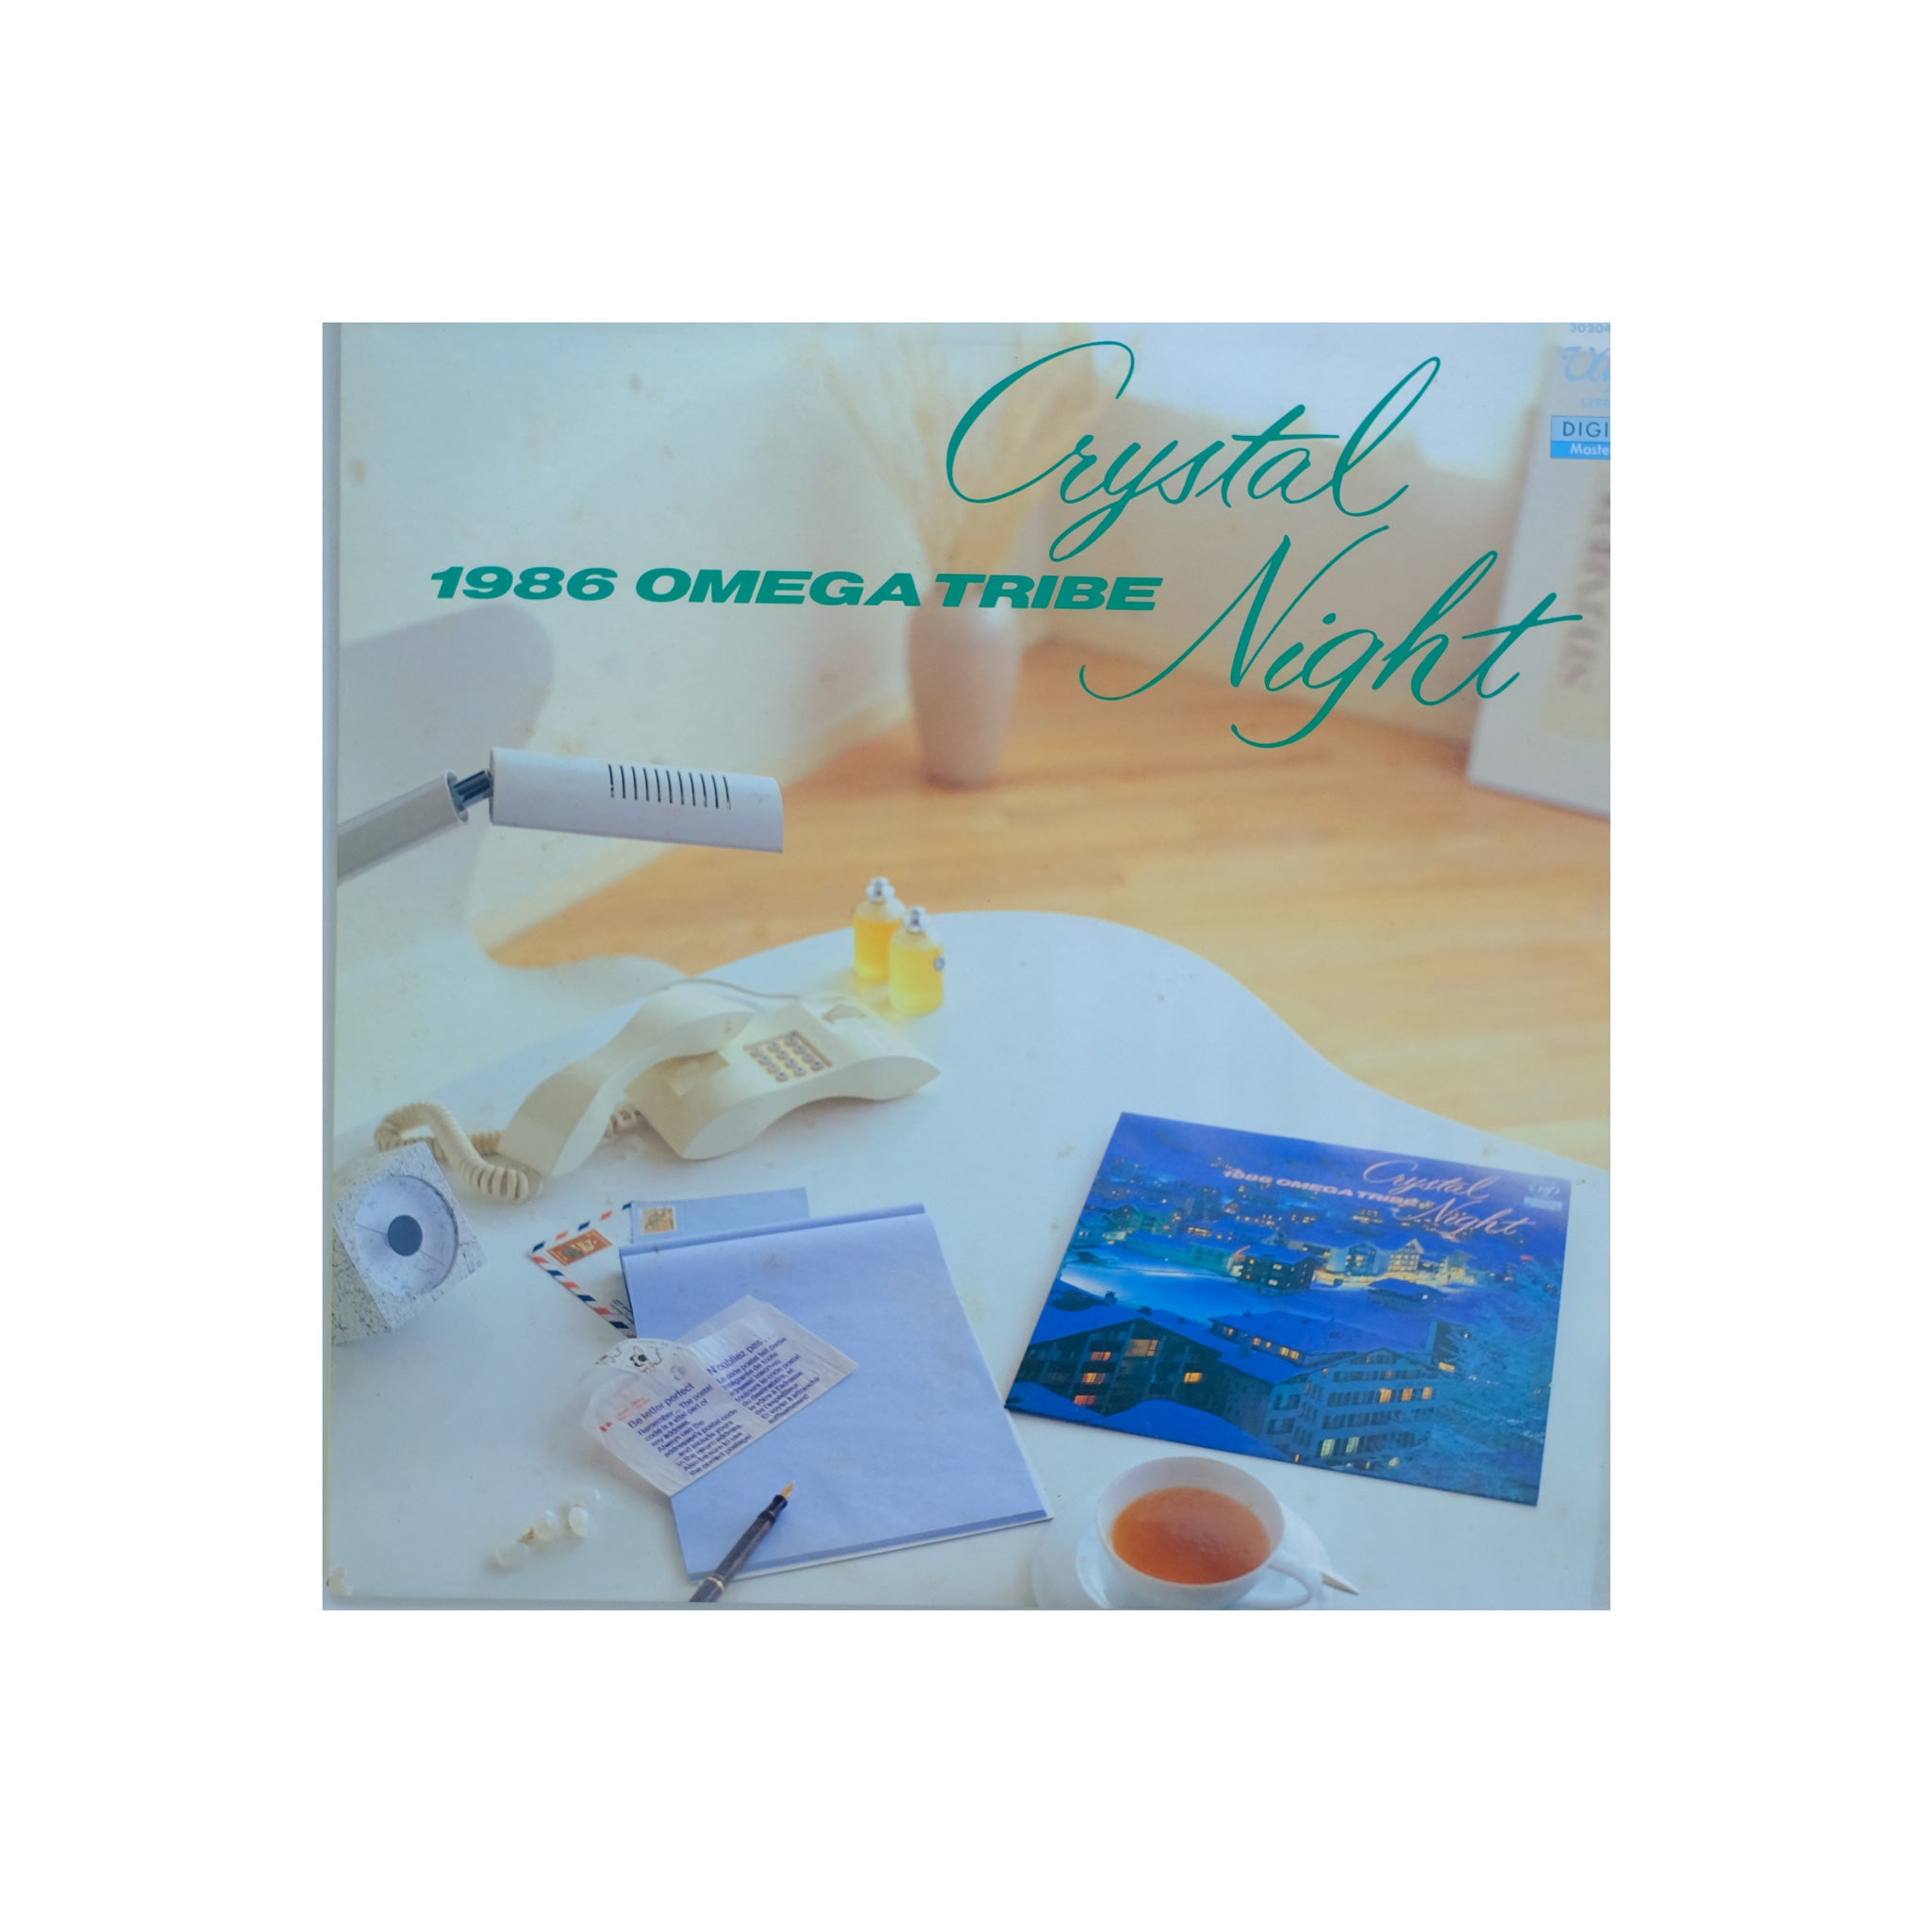 1986 Omega Tribe ‎- Crystal Night